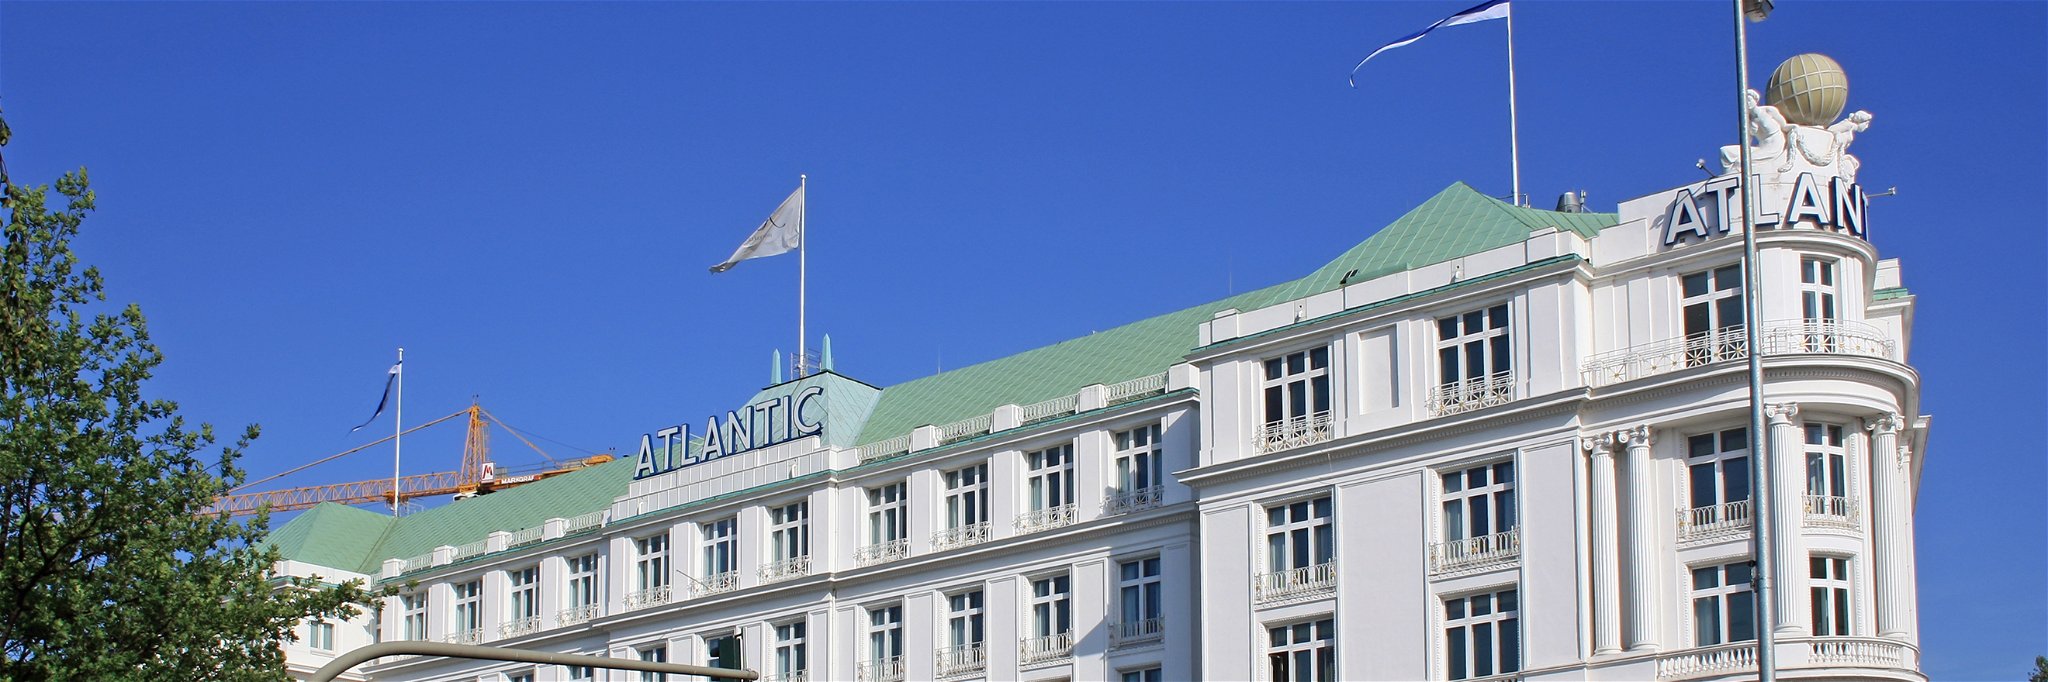 Das Hotel »Atlantic« in Hamburgs bester Lage. 